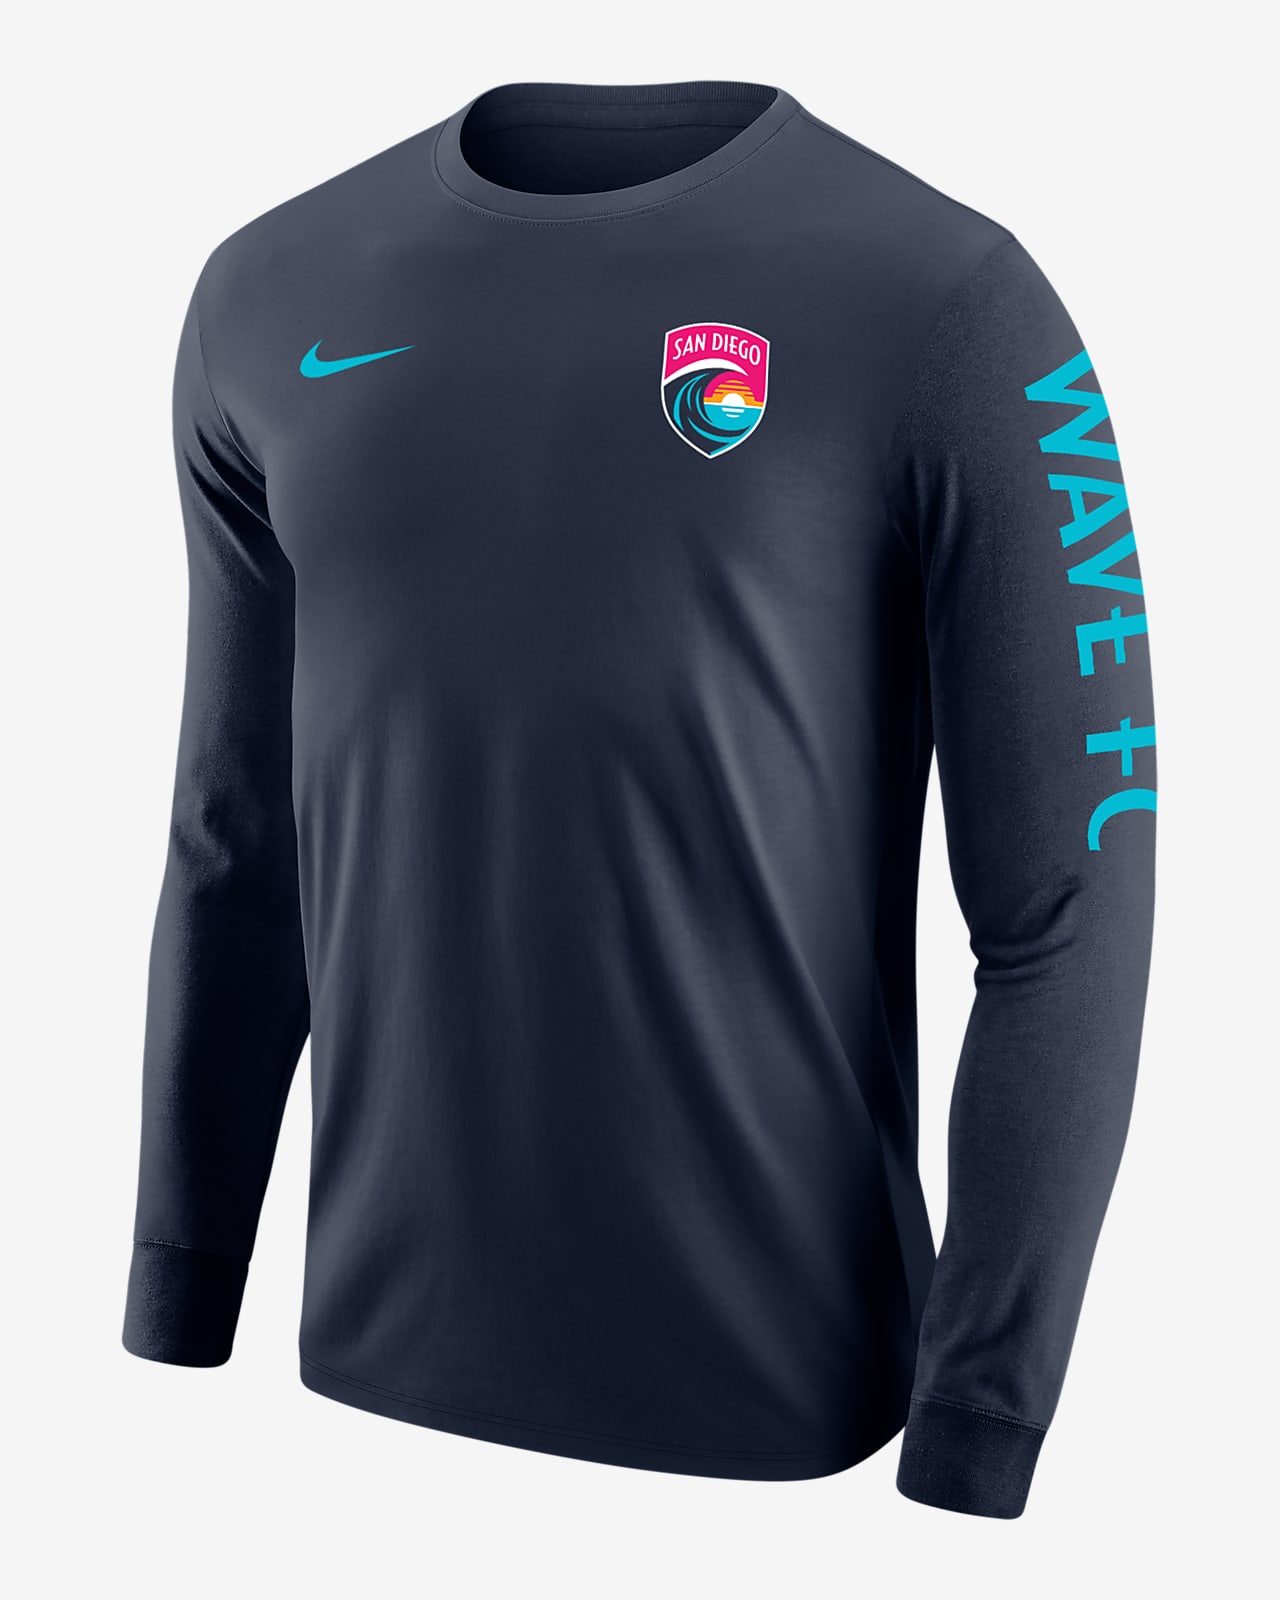 San Diego Wave Men's Nike Soccer Long-Sleeve T-Shirt